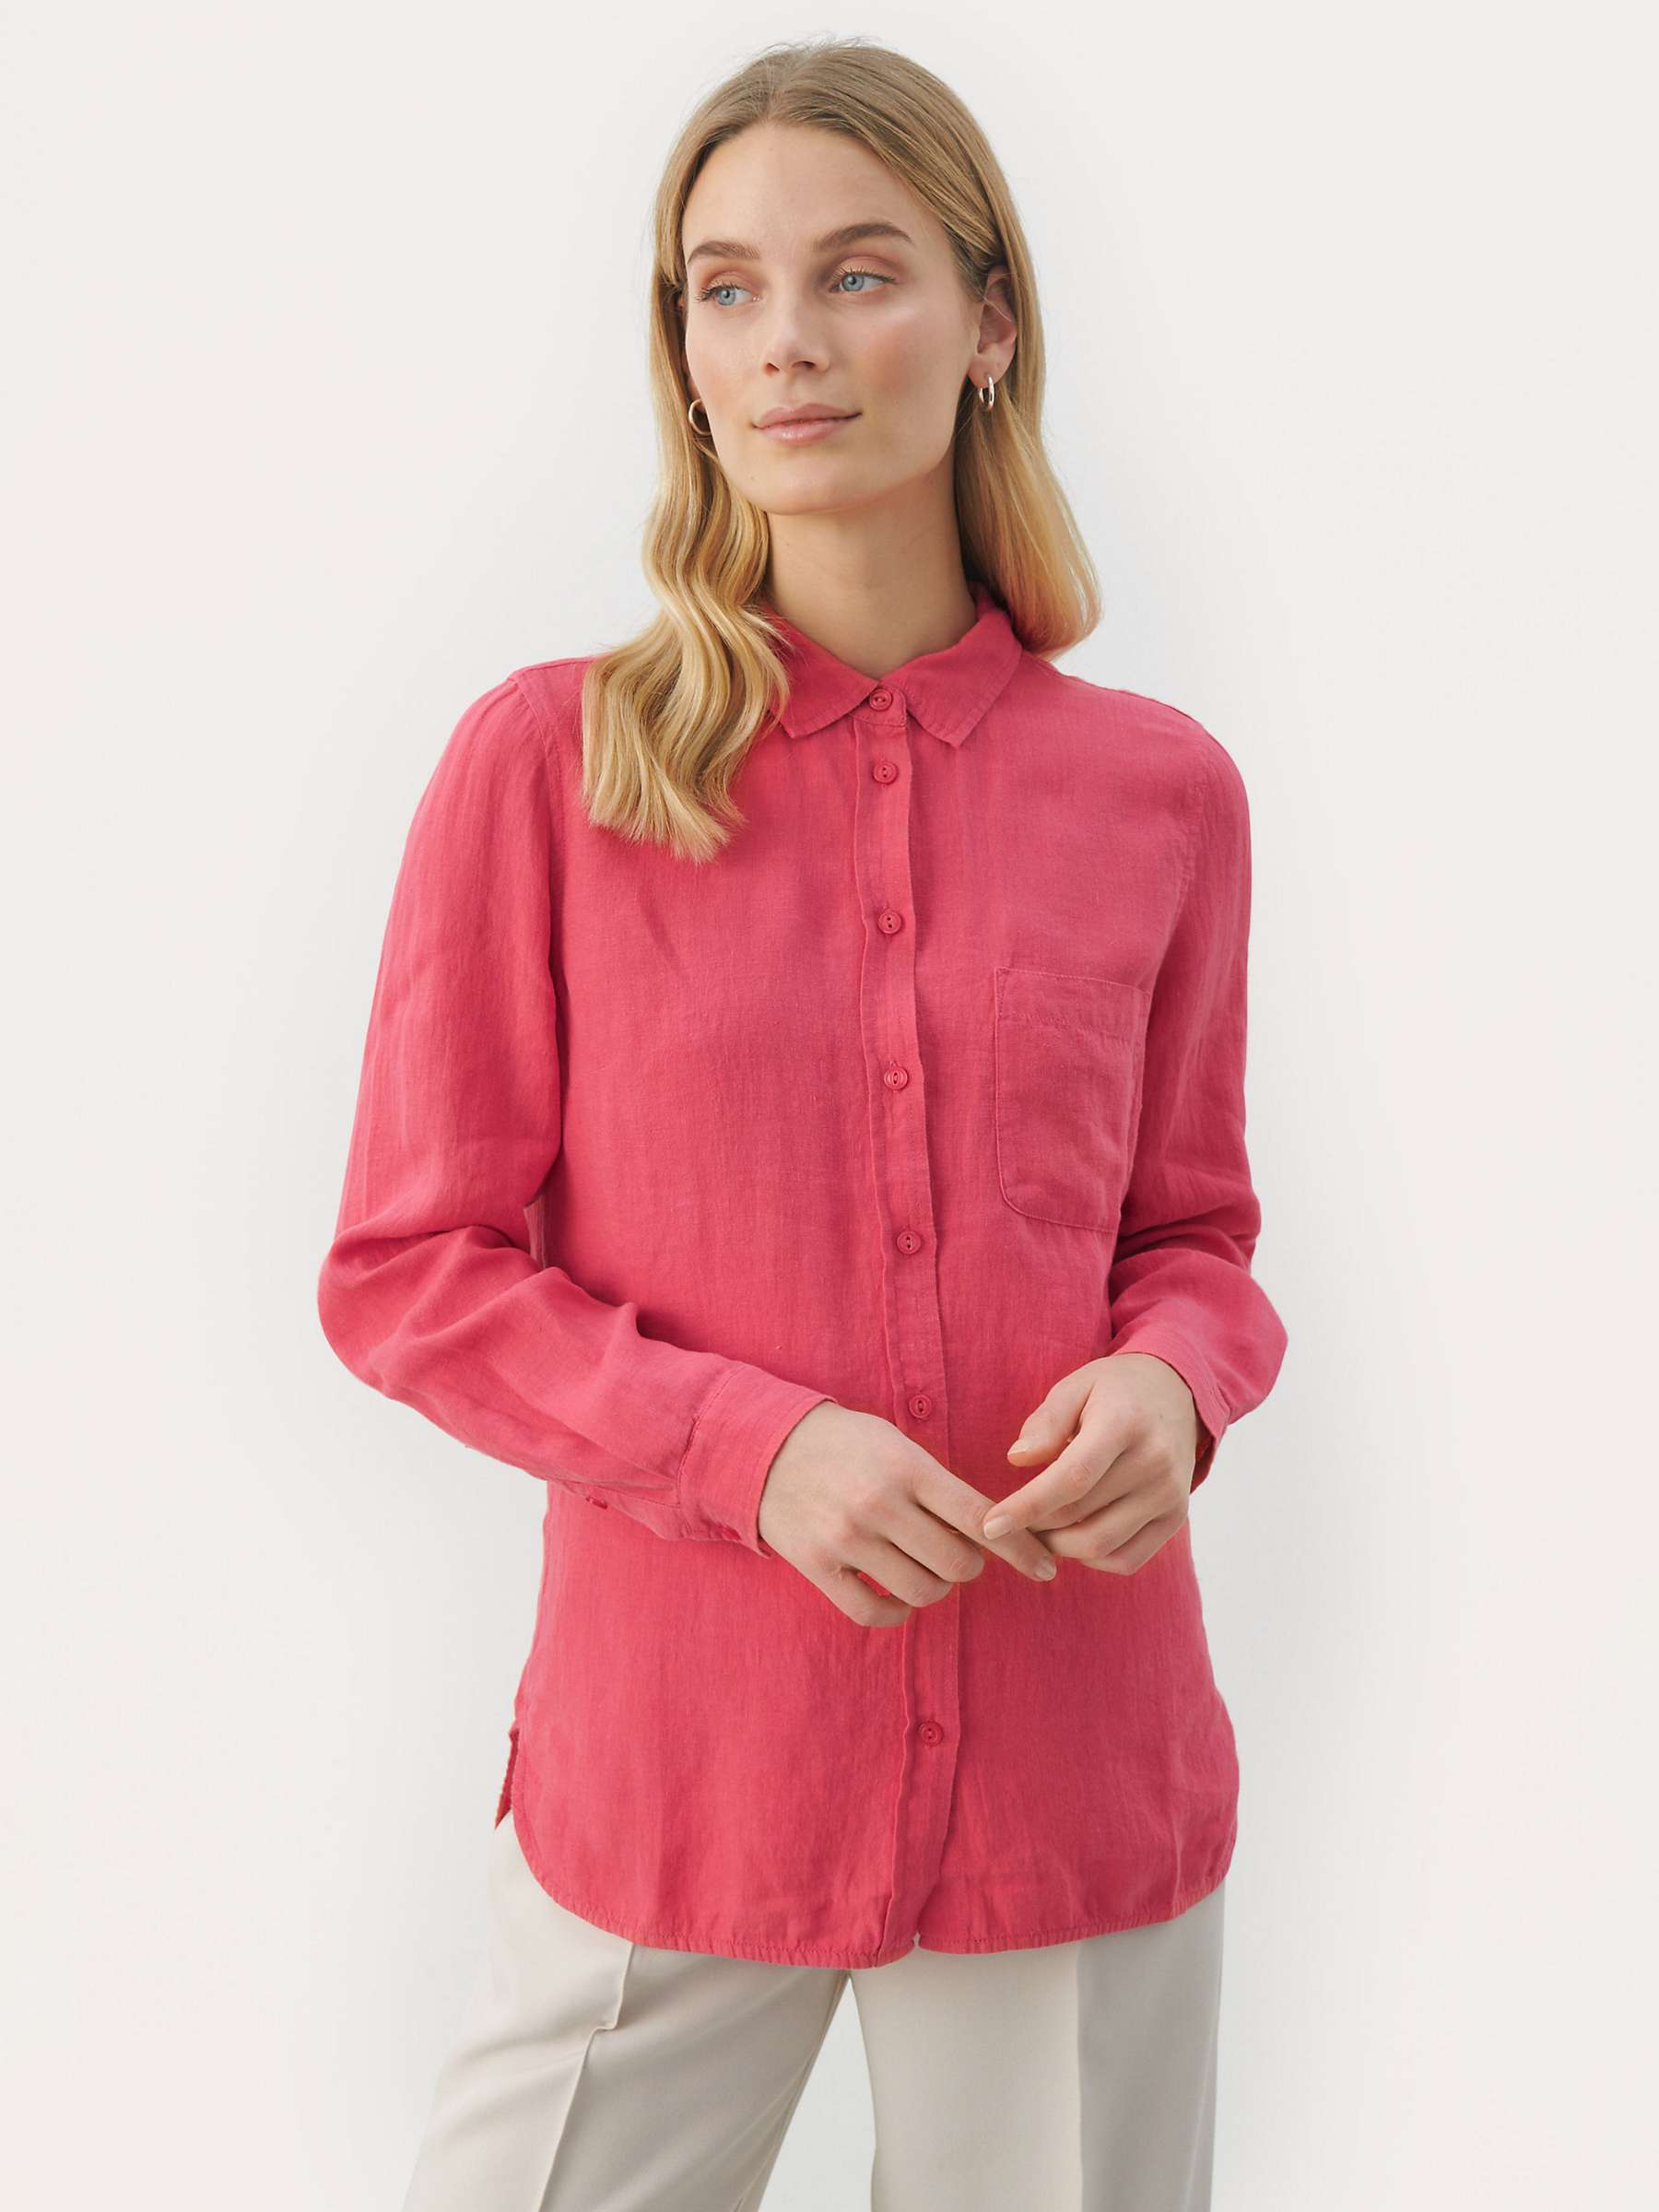 Buy Part Two Kivas Linen Regular Fit Long Sleeve Shirt Online at johnlewis.com